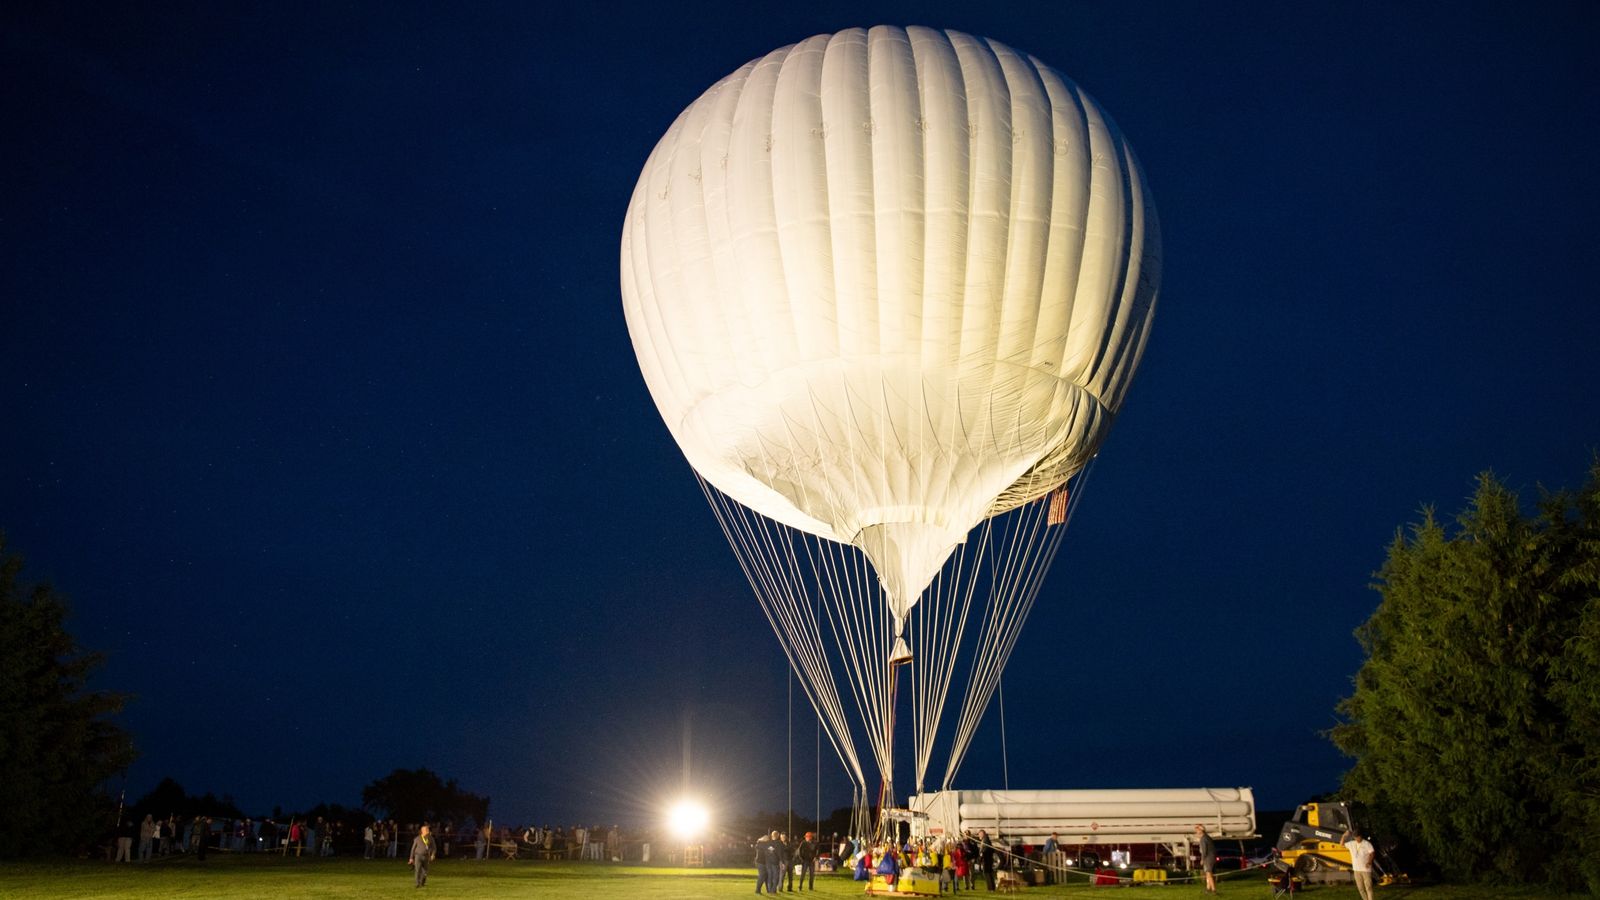 Pioneering transatlantic hydrogen balloon attempt scuppered by weather